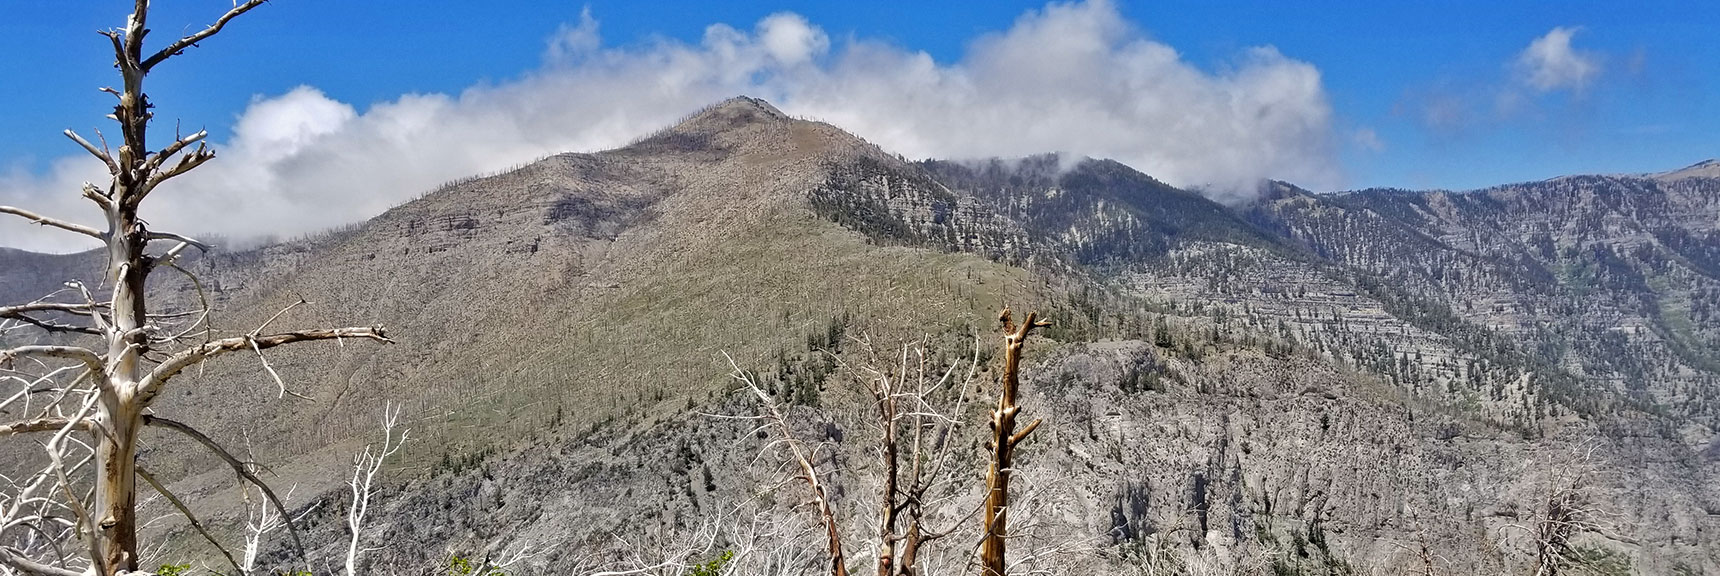 Griffith Peak North Ridge from Harris Mountain Summit | Harris Mountain Griffith Peak Circuit in Mt. Charleston Wilderness, Nevada